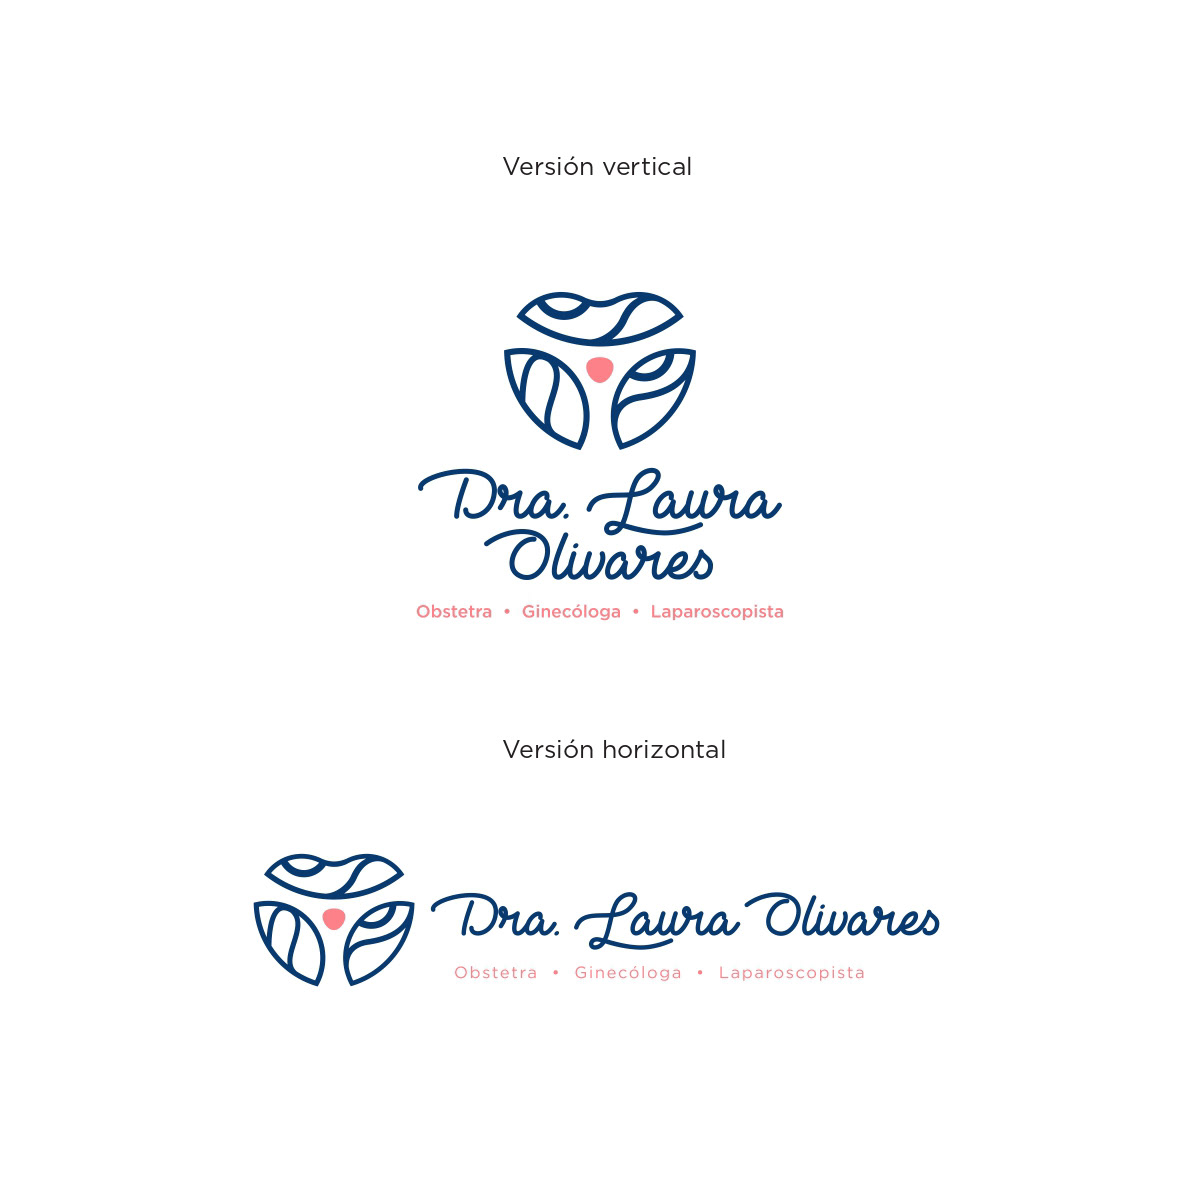 OBGYN doctor ginecología medicina medico identidade visual Logo Design brand identity Graphic Designer Brand Design